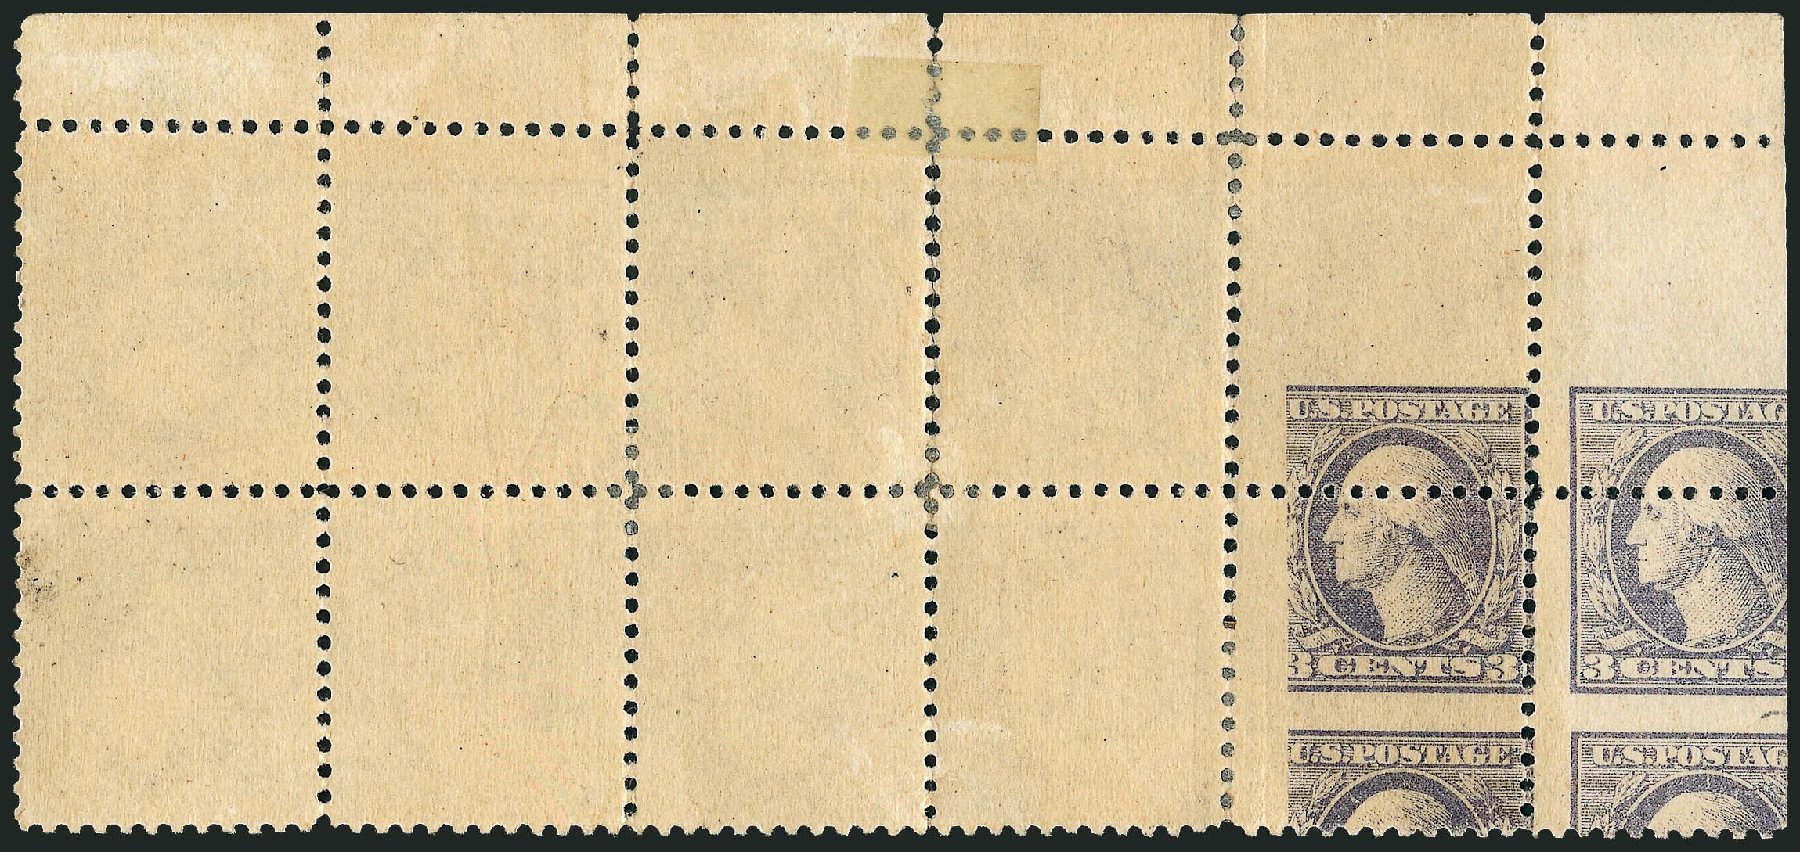 Price of US Stamps Scott Catalogue 529: 1918 3c Washington Offset Perf 11. Robert Siegel Auction Galleries, Jun 2011, Sale 1010, Lot 116